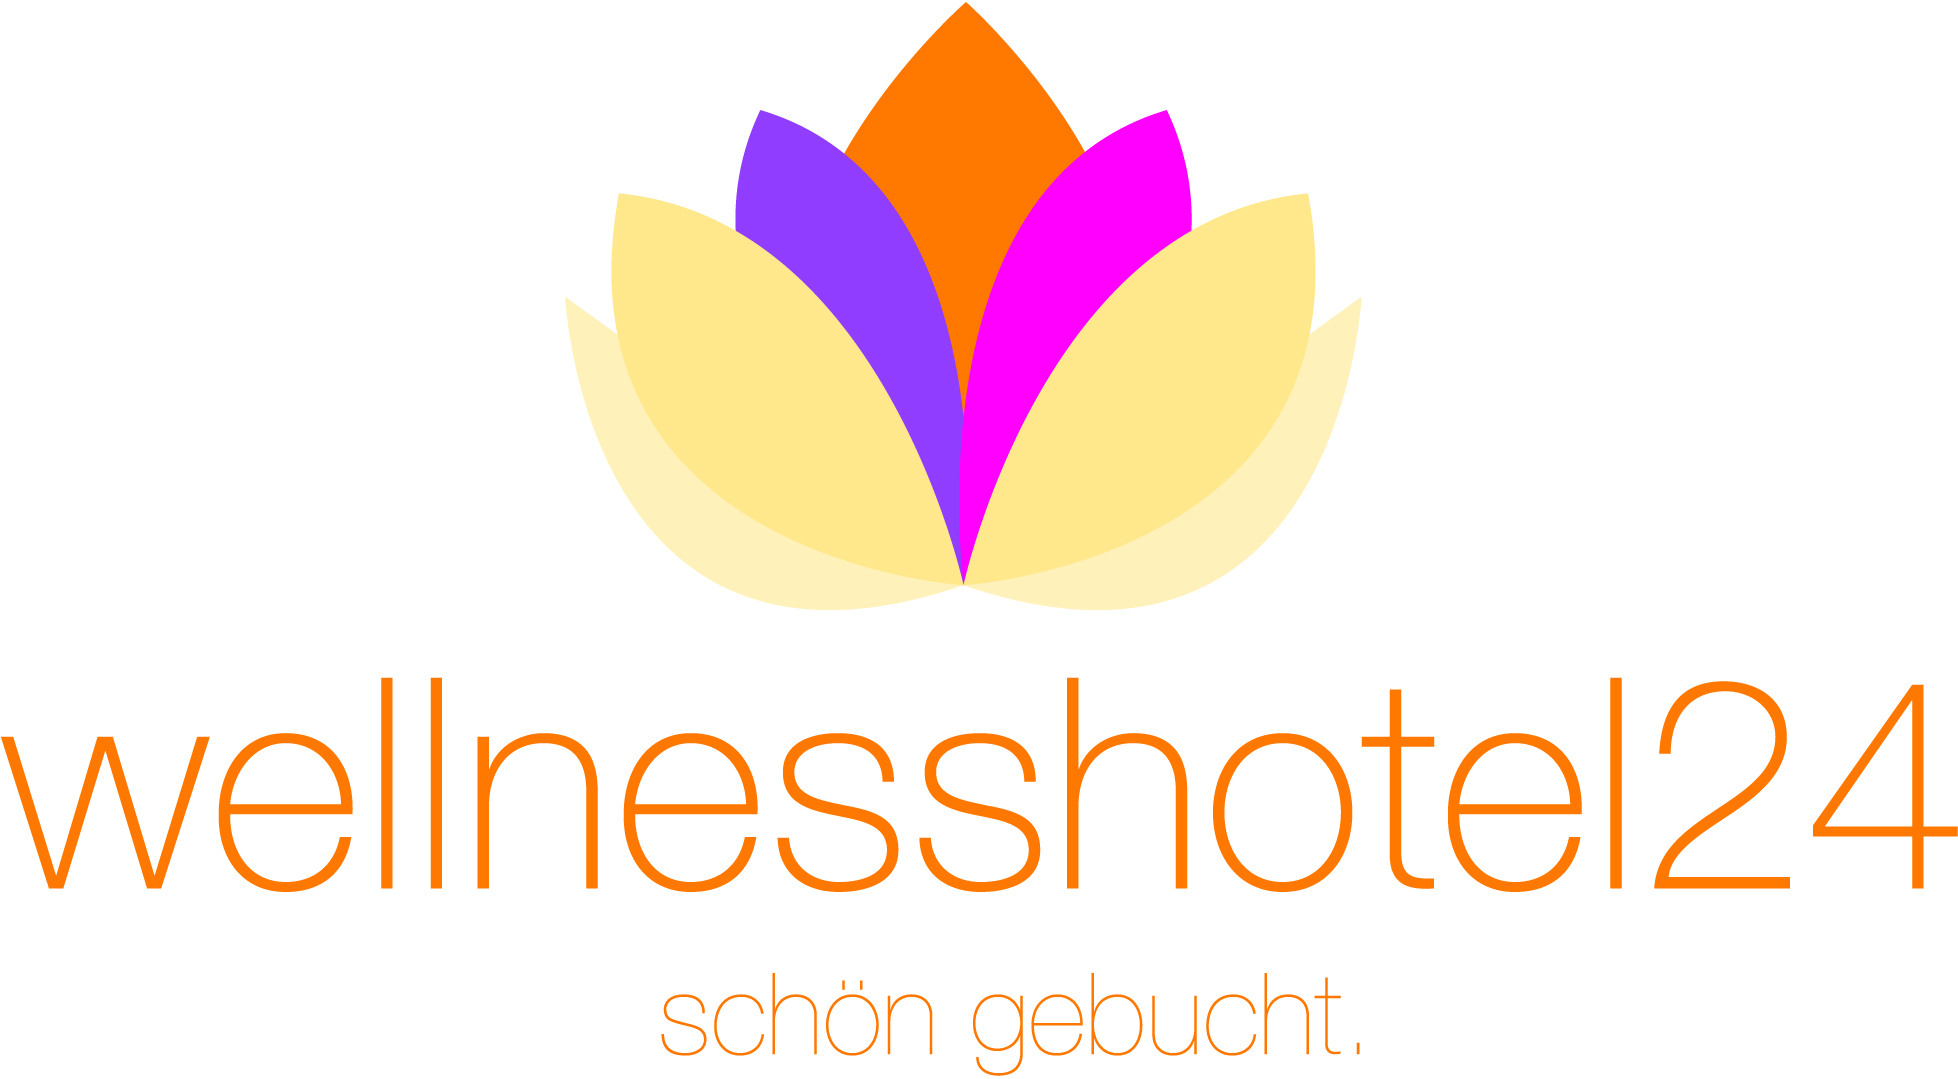  wellnesshotel24 c/o profitsol GmbH & Co. KG Logo